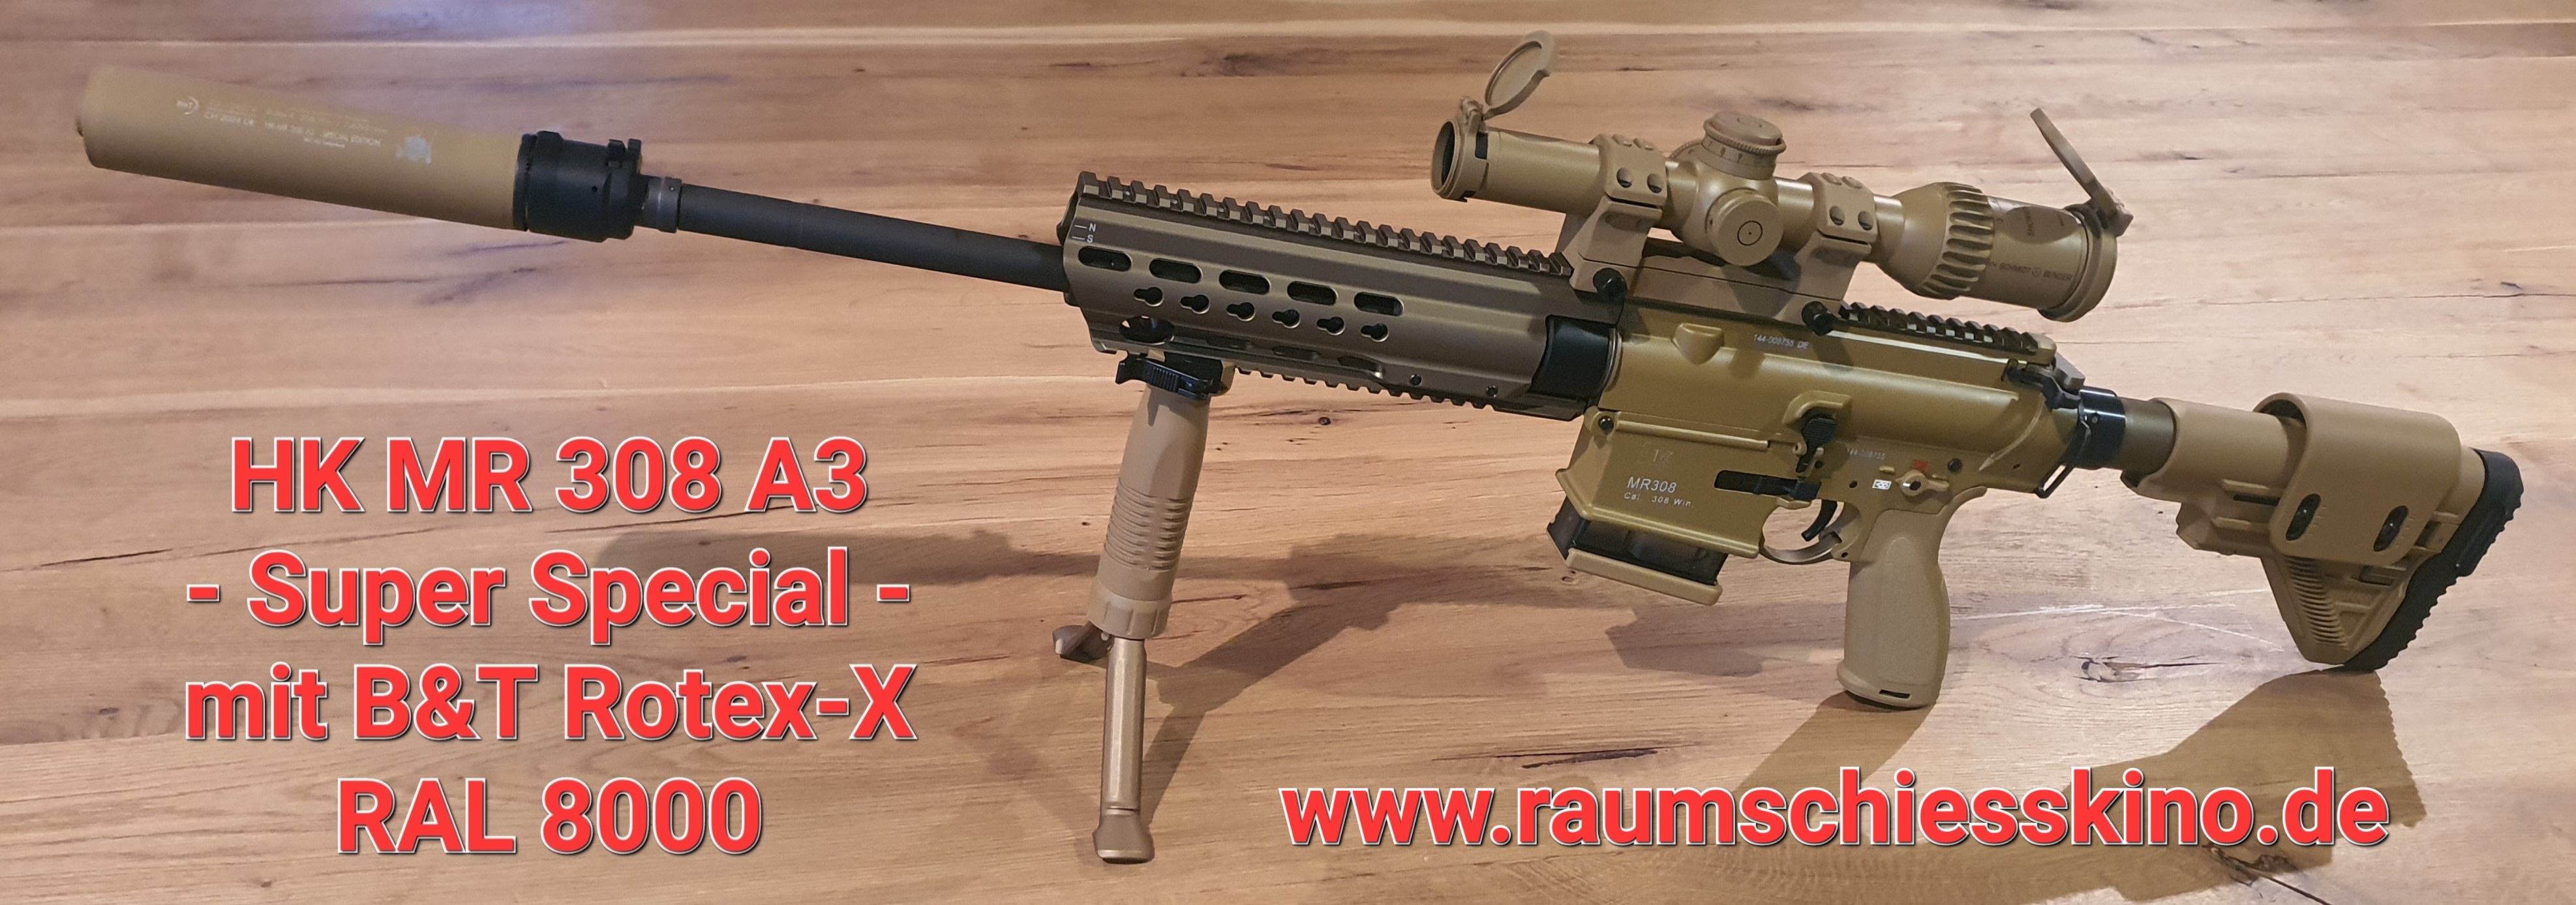 HK MR 308 A3 - Super Special - mit Rotex-X